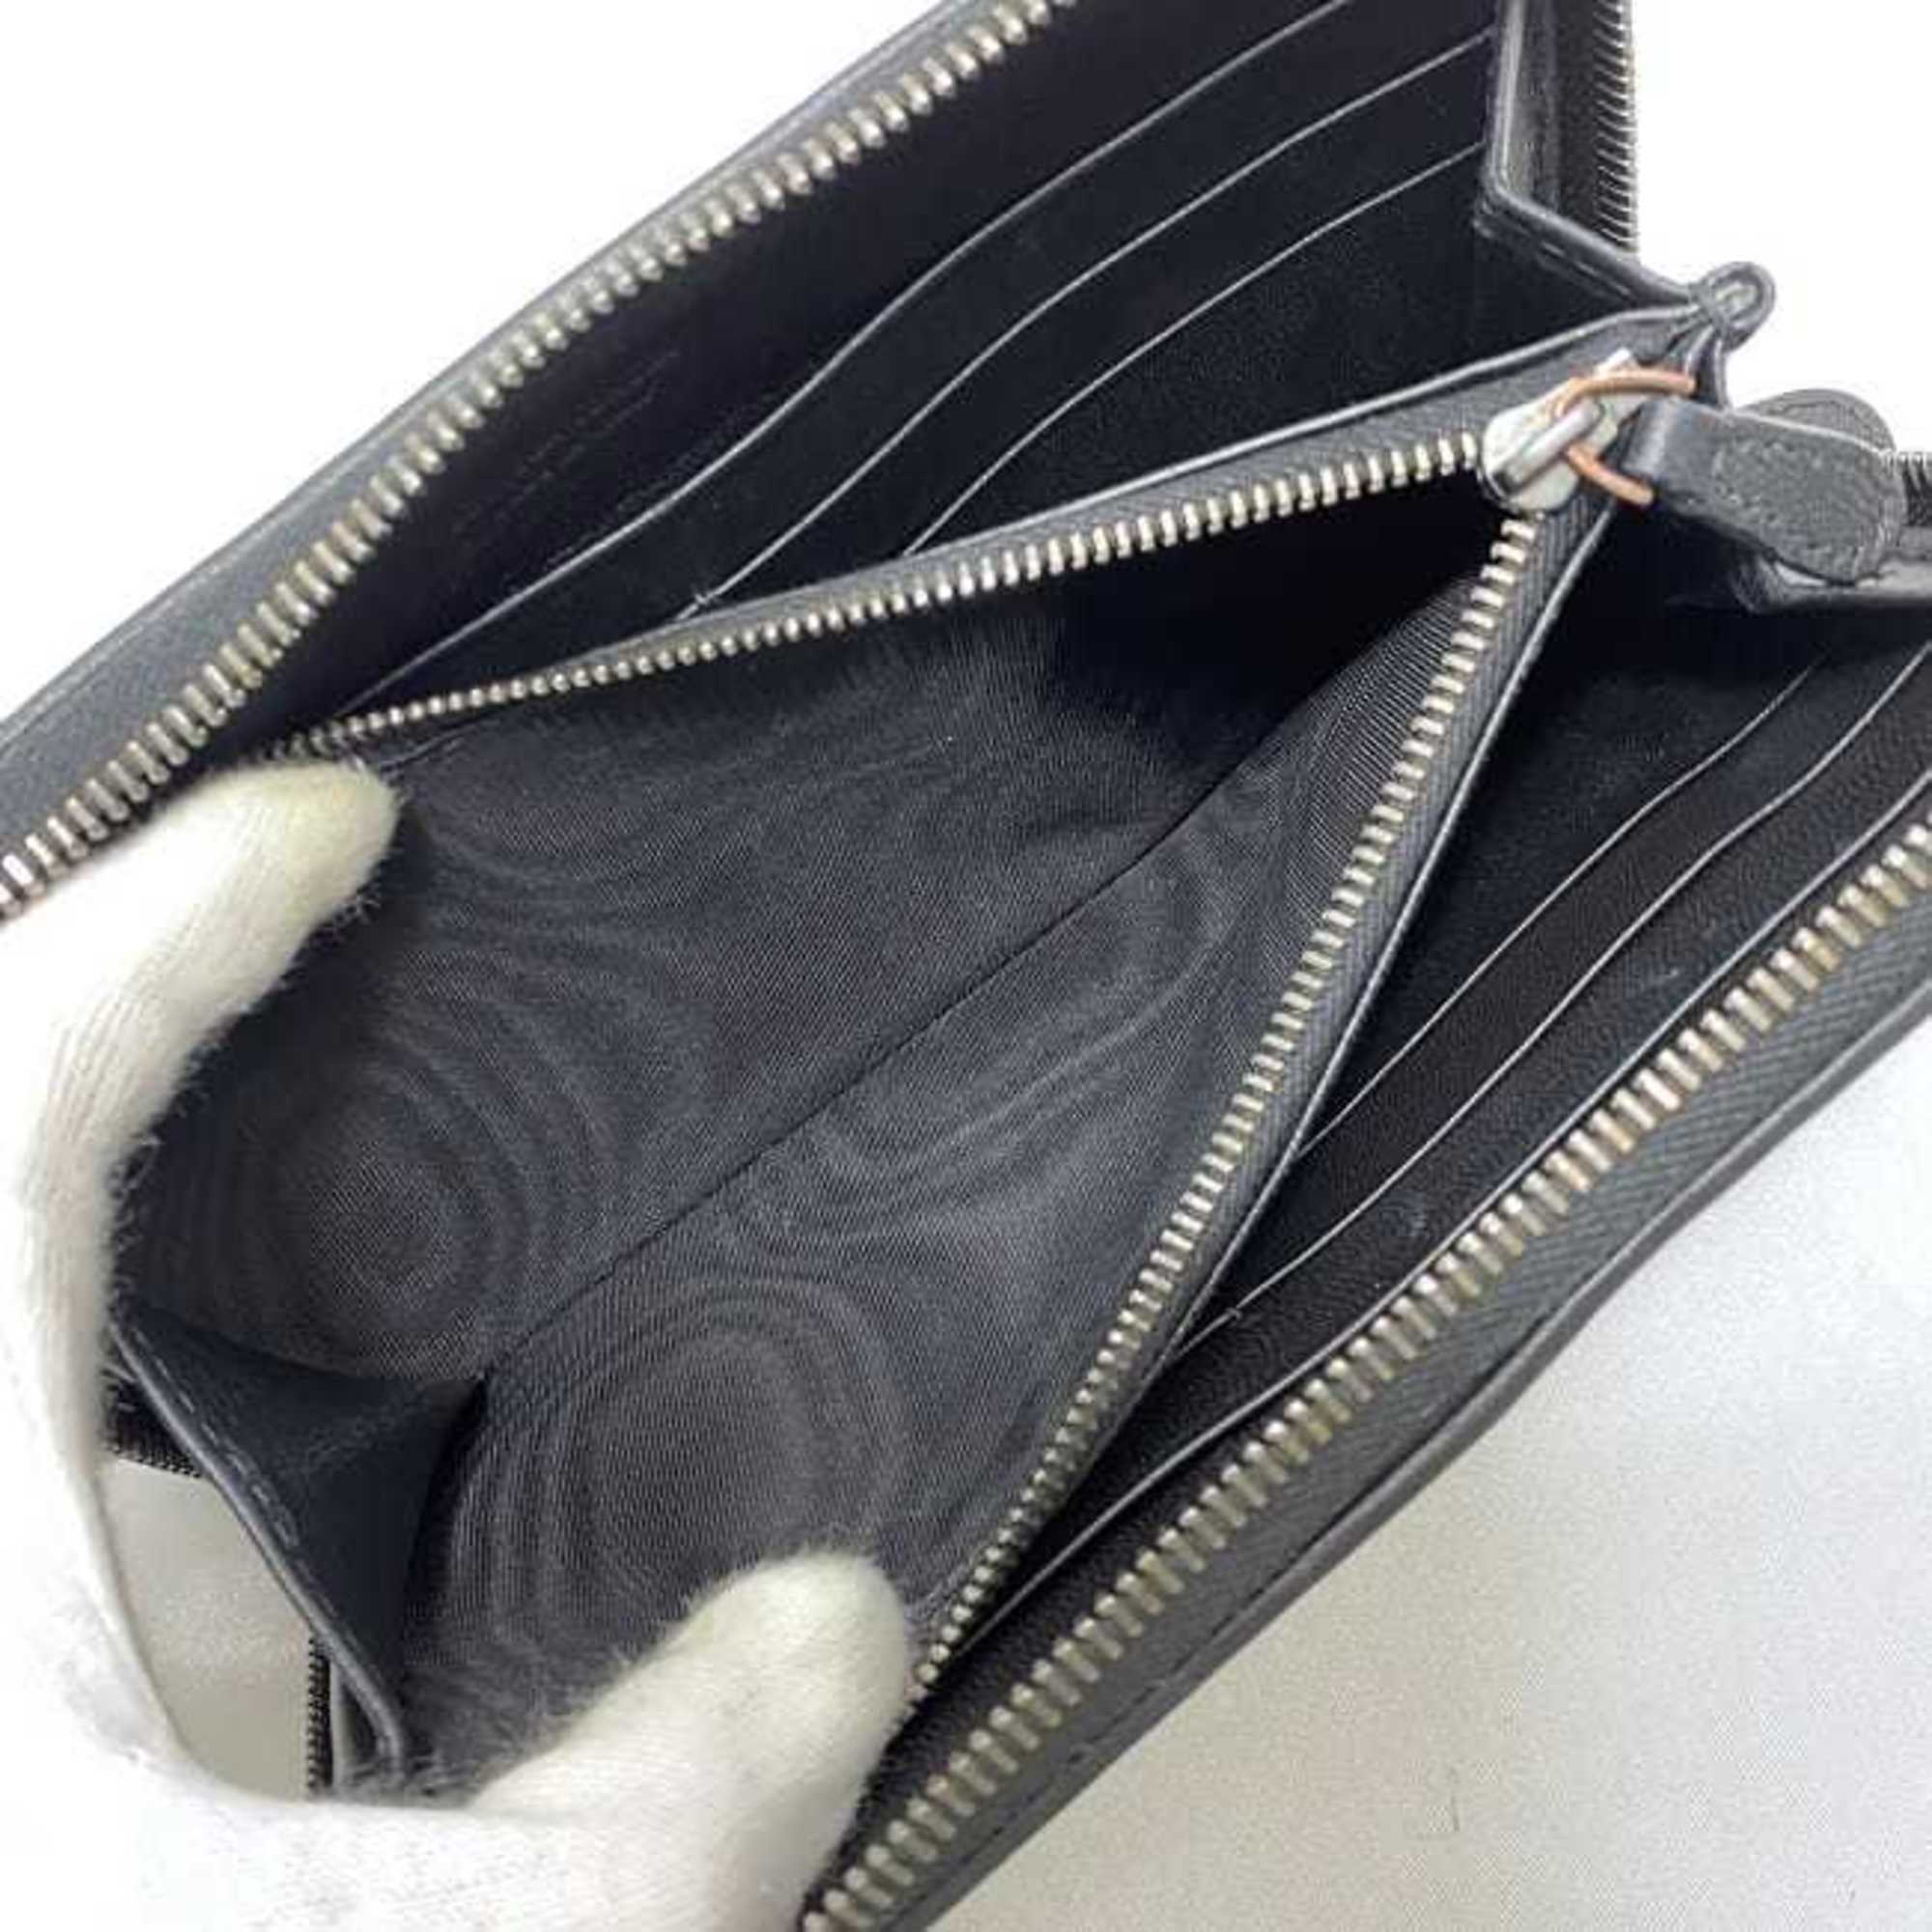 Bottega Veneta Round Long Wallet Black Intrecciato 114076 Leather BOTTEGA VENETA Unisex